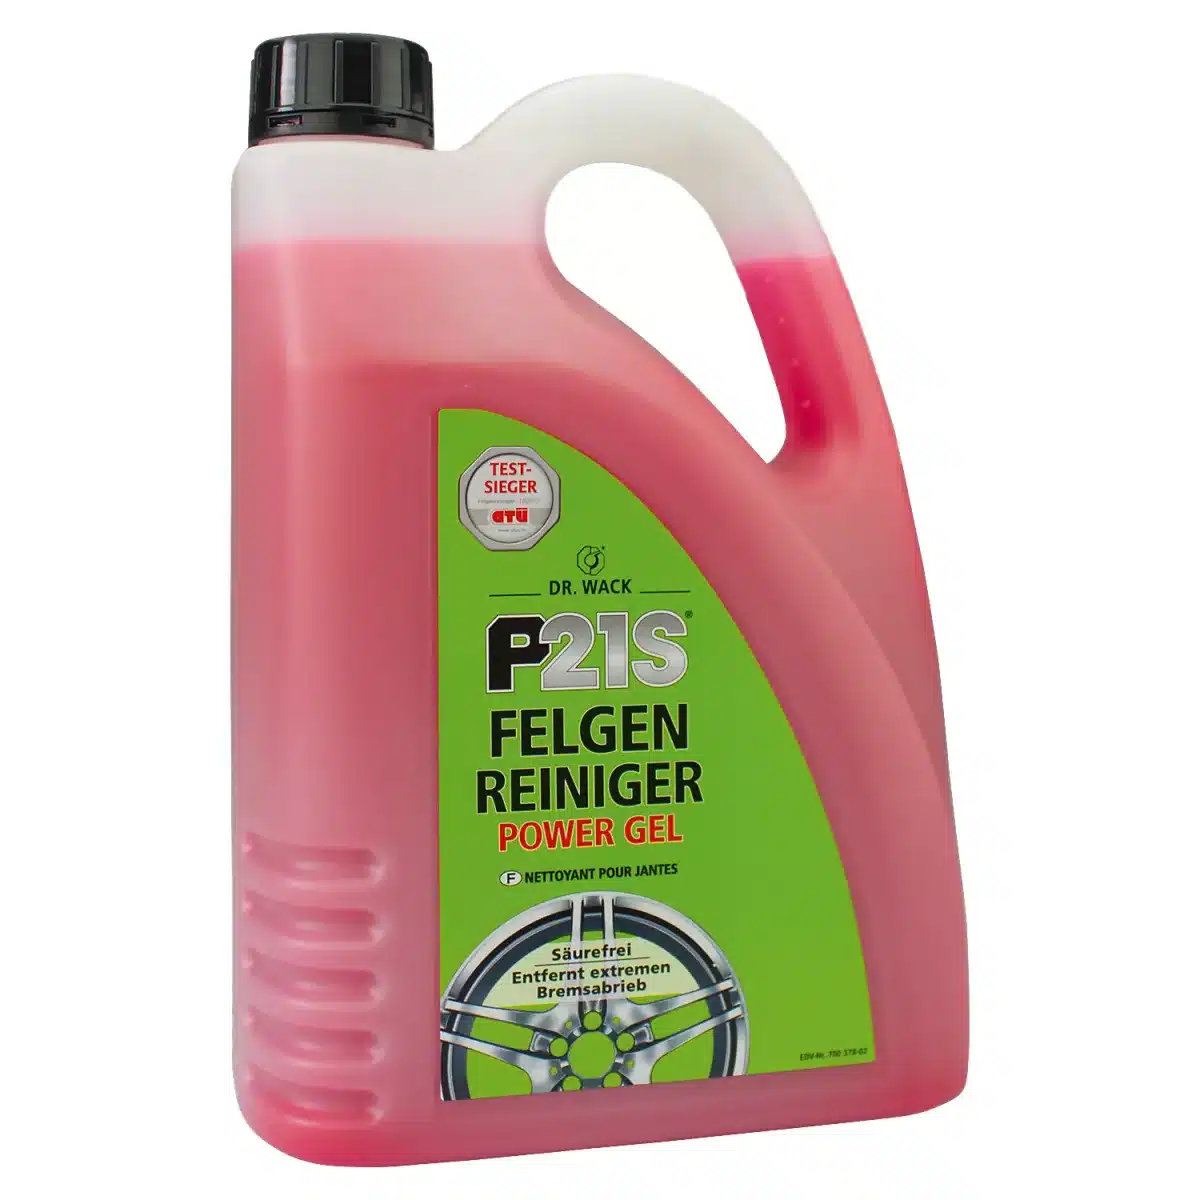 Dr. Wack P21S Felgen-Reiniger POWER GEL 2 Liter